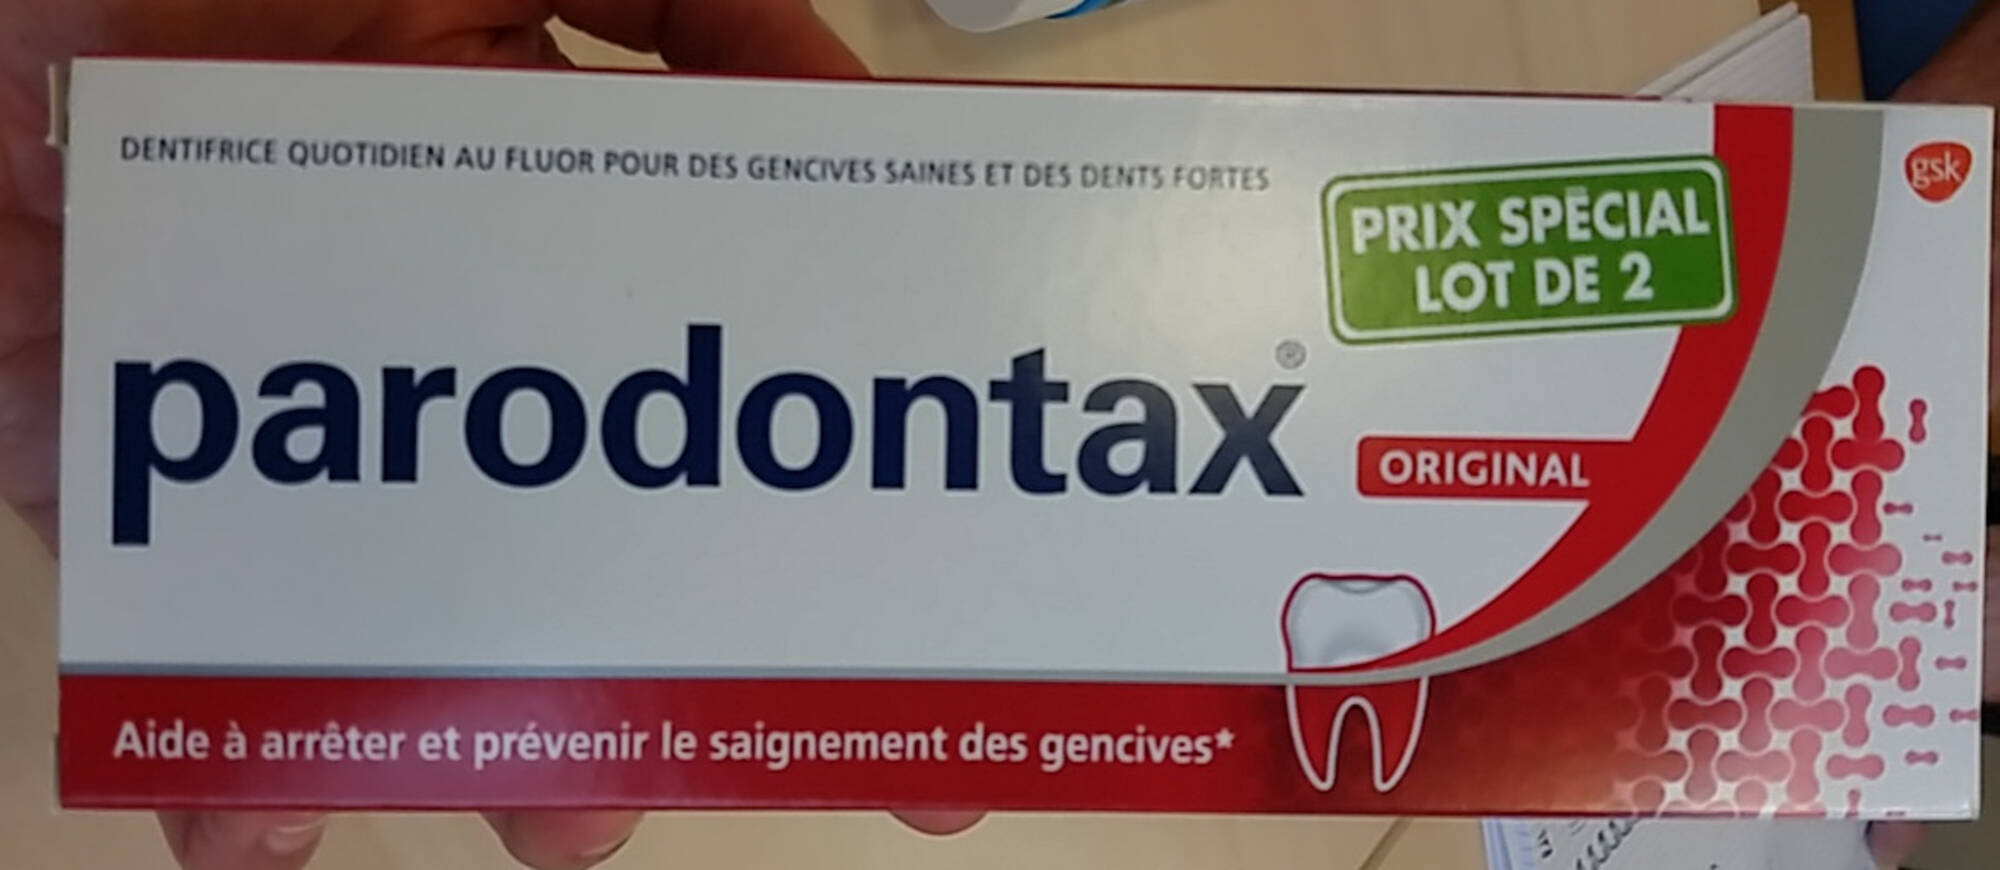 PARODONTAX - Original, dentifrice quotidien au fluor